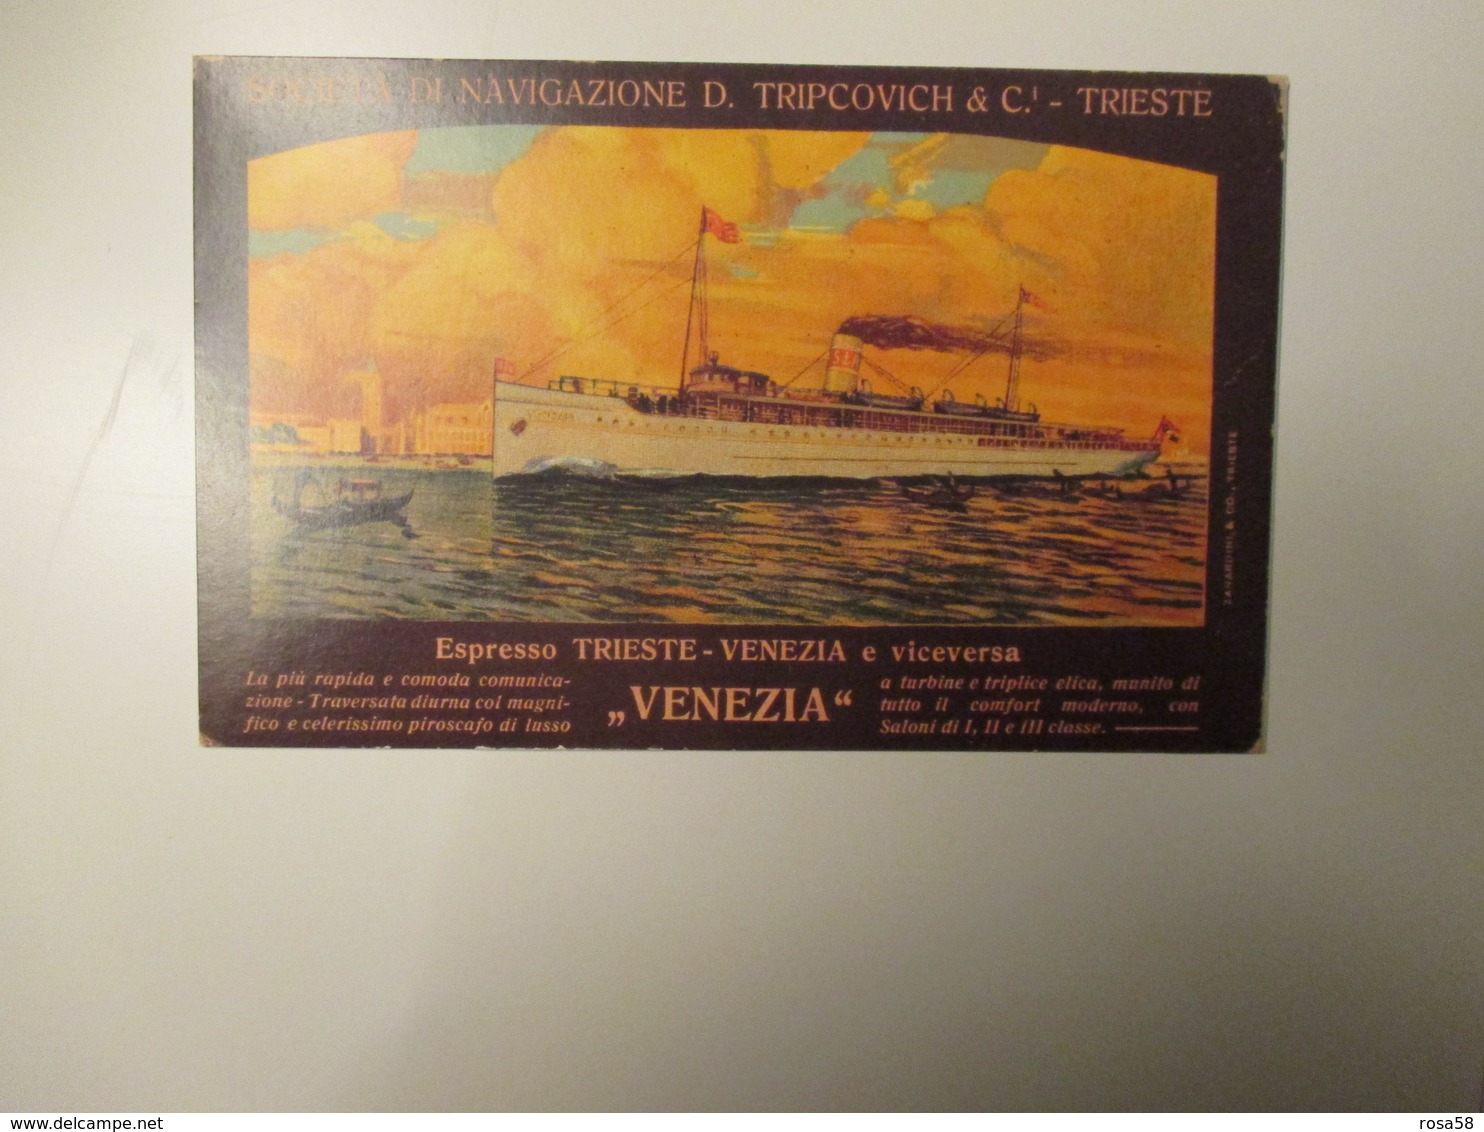 Società Navigazione TRIPCOVICH & C Trieste Espresso Trieste Venezia RIPRODUZIONE? - Piroscafi